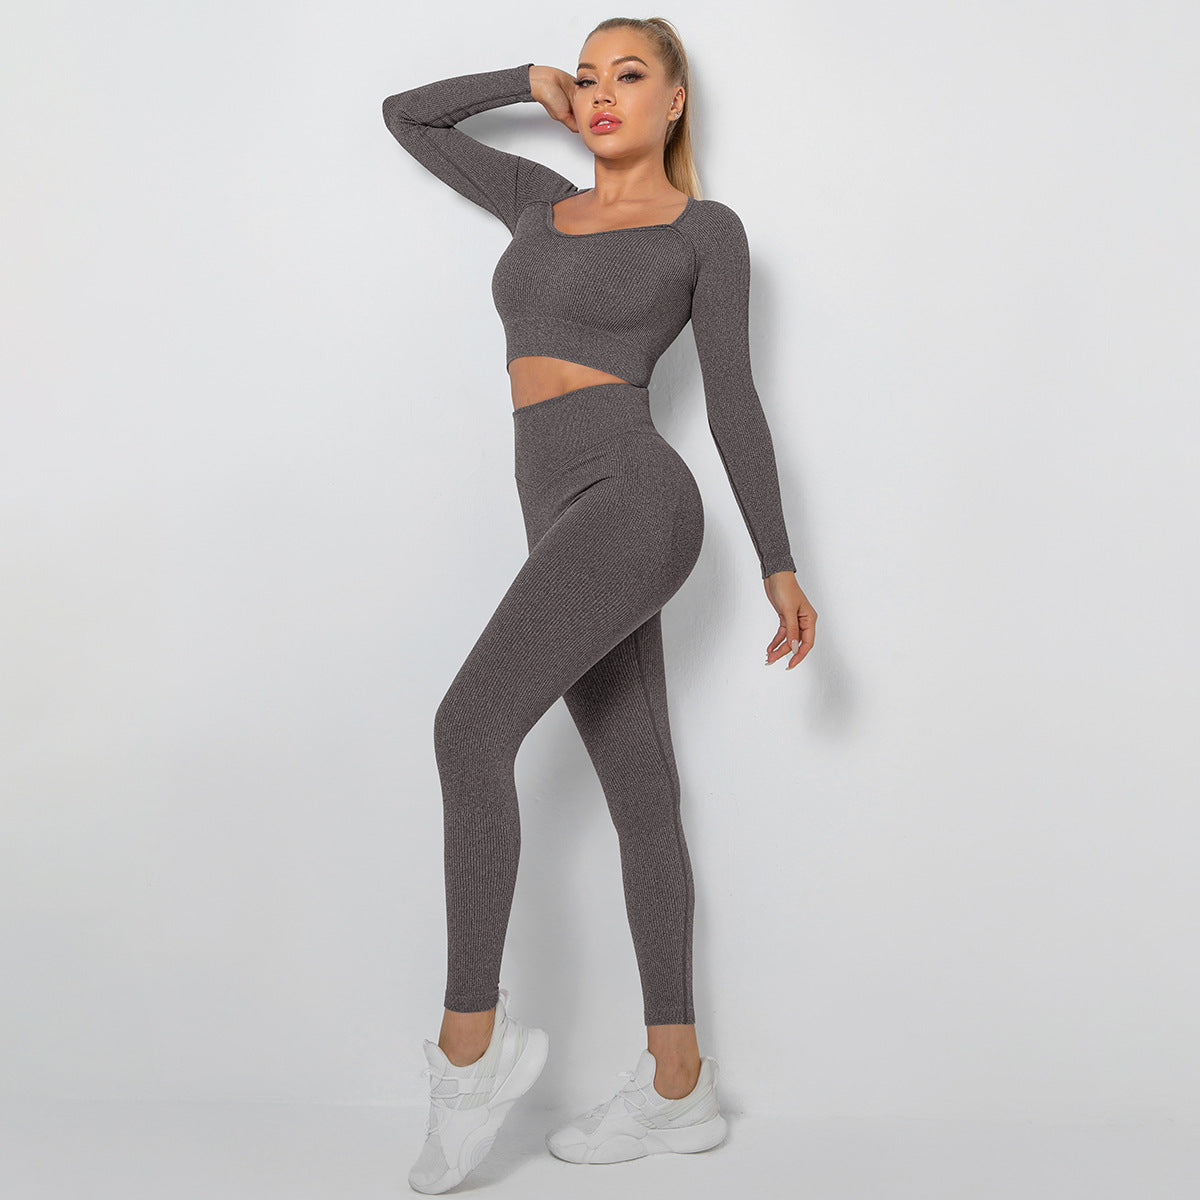 Hzori Seamless Thread Multi-Angle Stitching Low Collar Yoga Long-Sleeve Suit Sports Running Fitness Yoga Wear Women